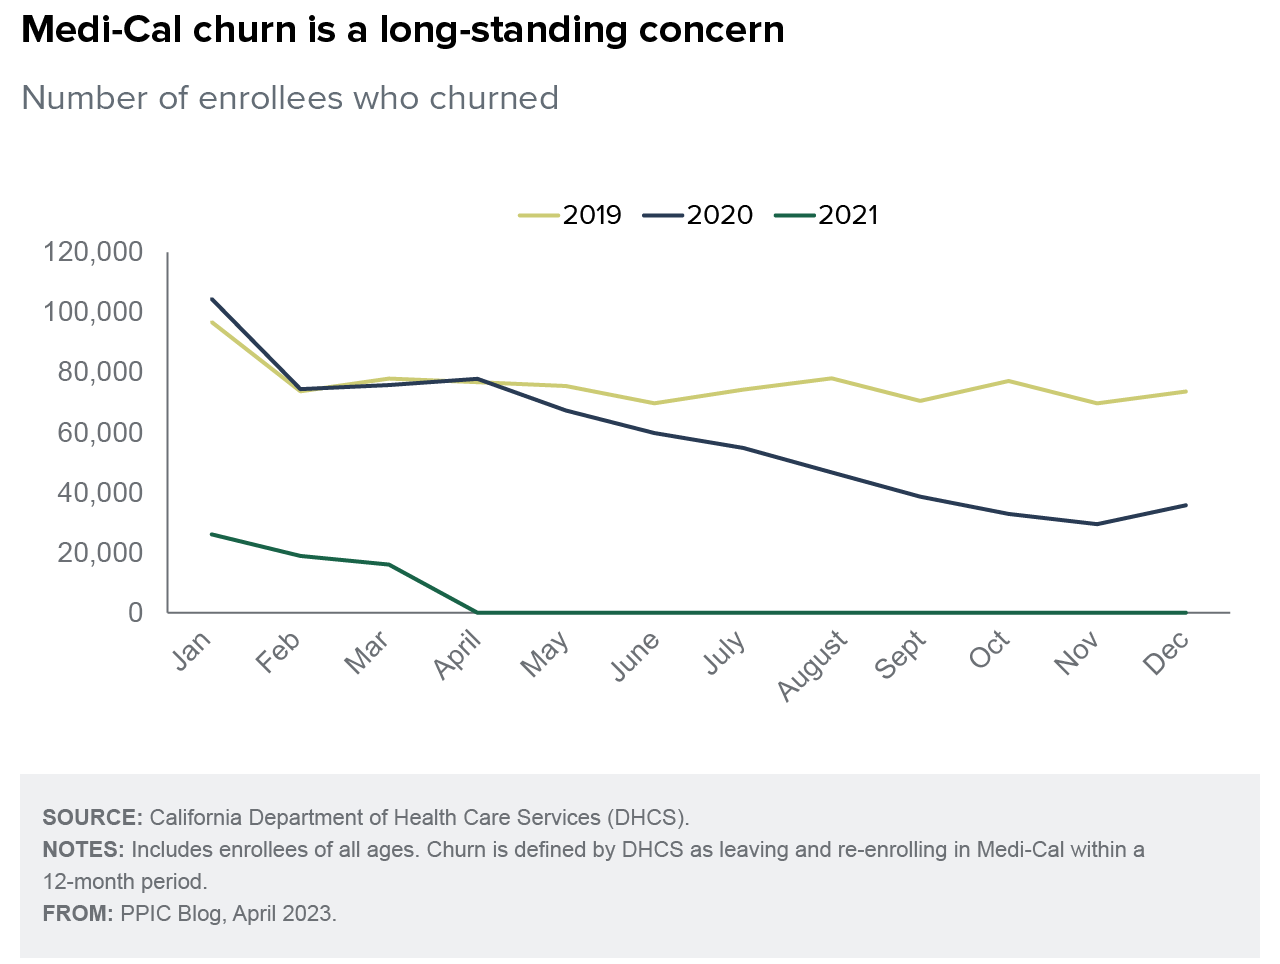 figure - Medi-Cal churn is a long-standing concern